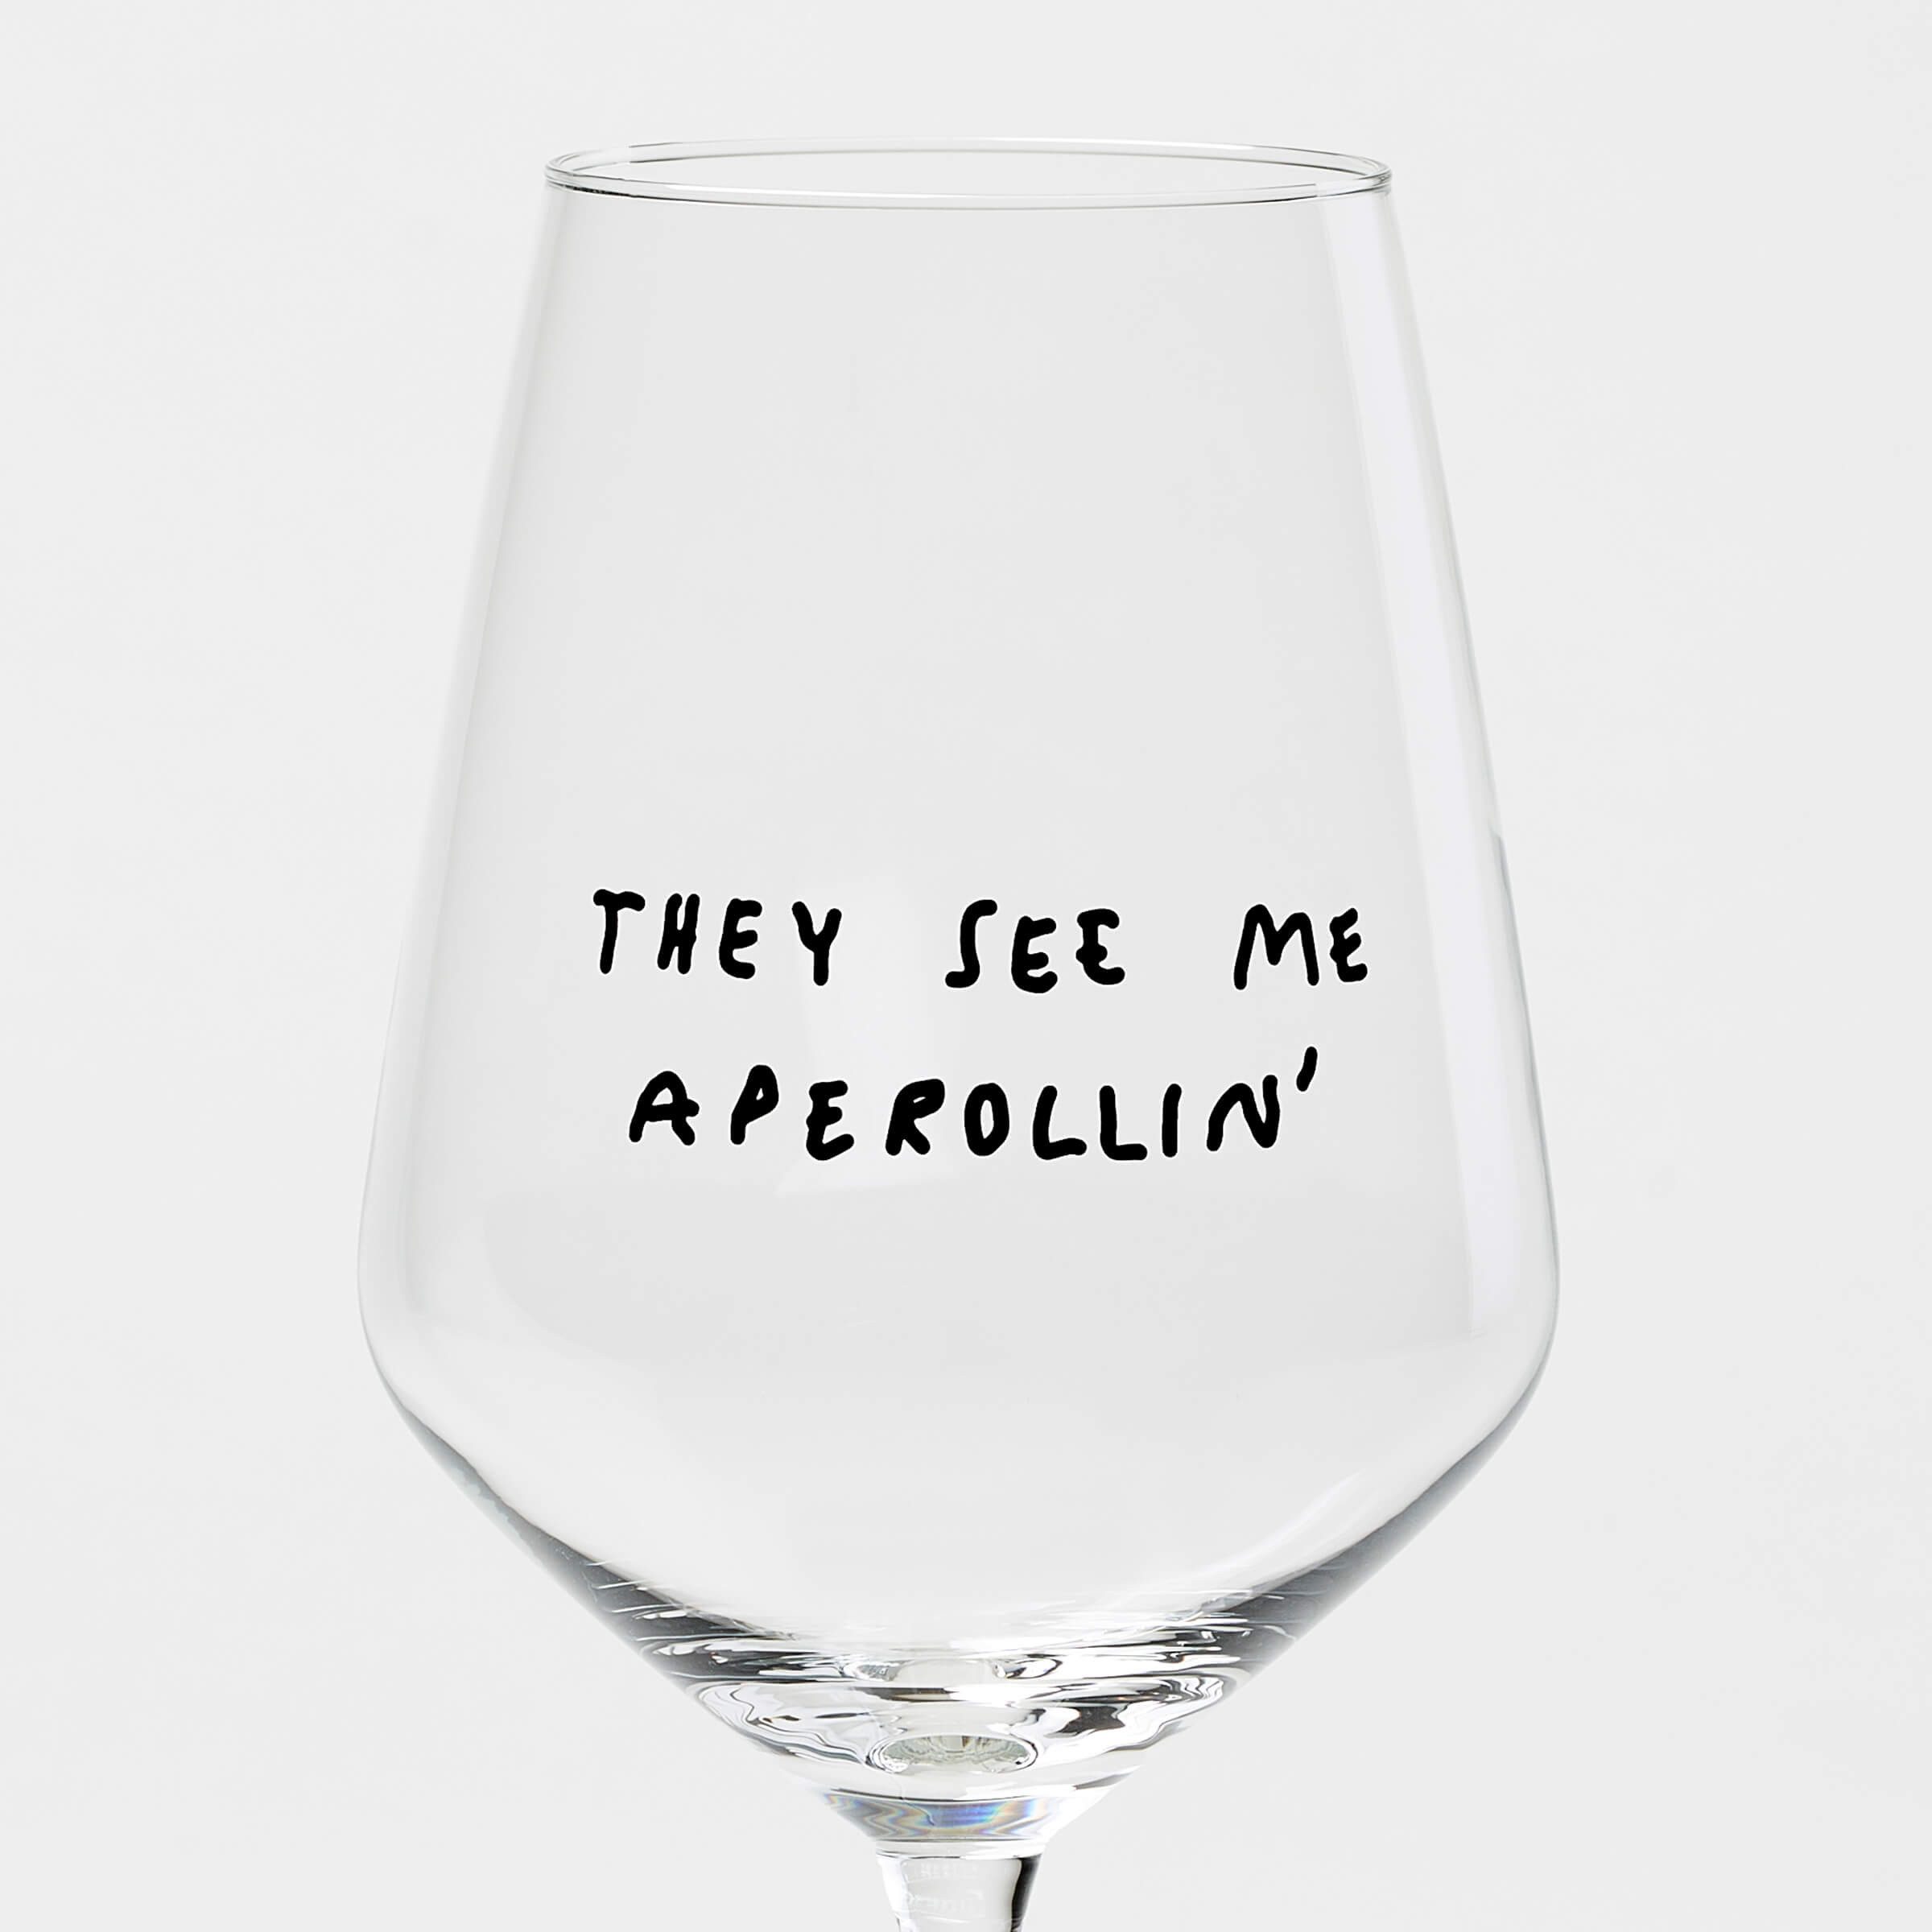 selekkt Weinglas "They See Me Aperollin'" Glas by Johanna Schwarzer × selekkt, Glas